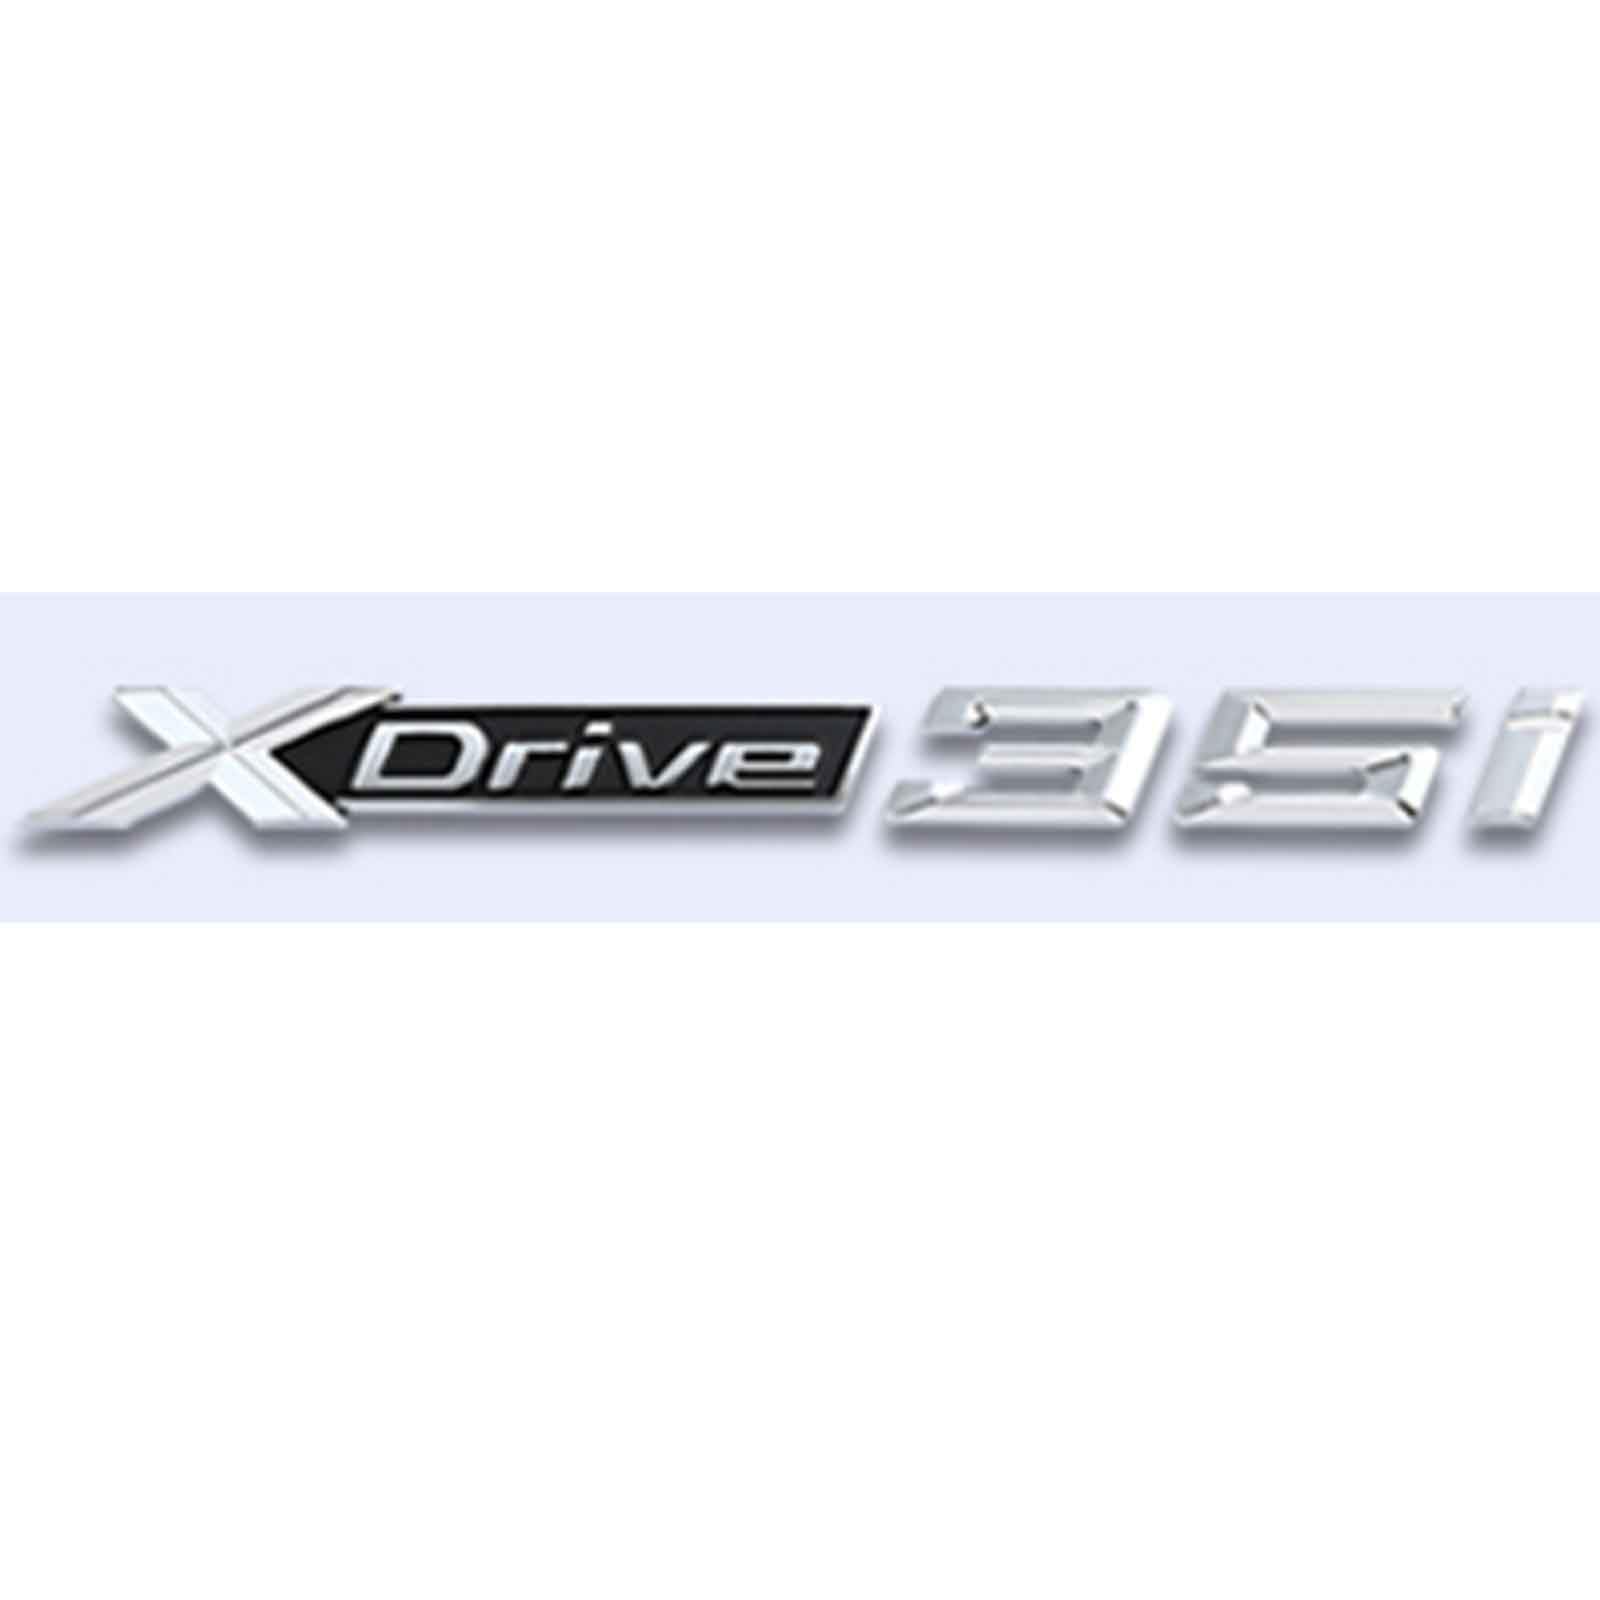 Auto Metall Emblem Badge für BMW X2 X3 X4 X5 X6 X7 E83 F25 F26 E70 M Performance, Selbstklebend Karosserie Aufkleber Autoaufkleber Auto Dekoration Zubehör,Silver- XDrive35i von DJUNA